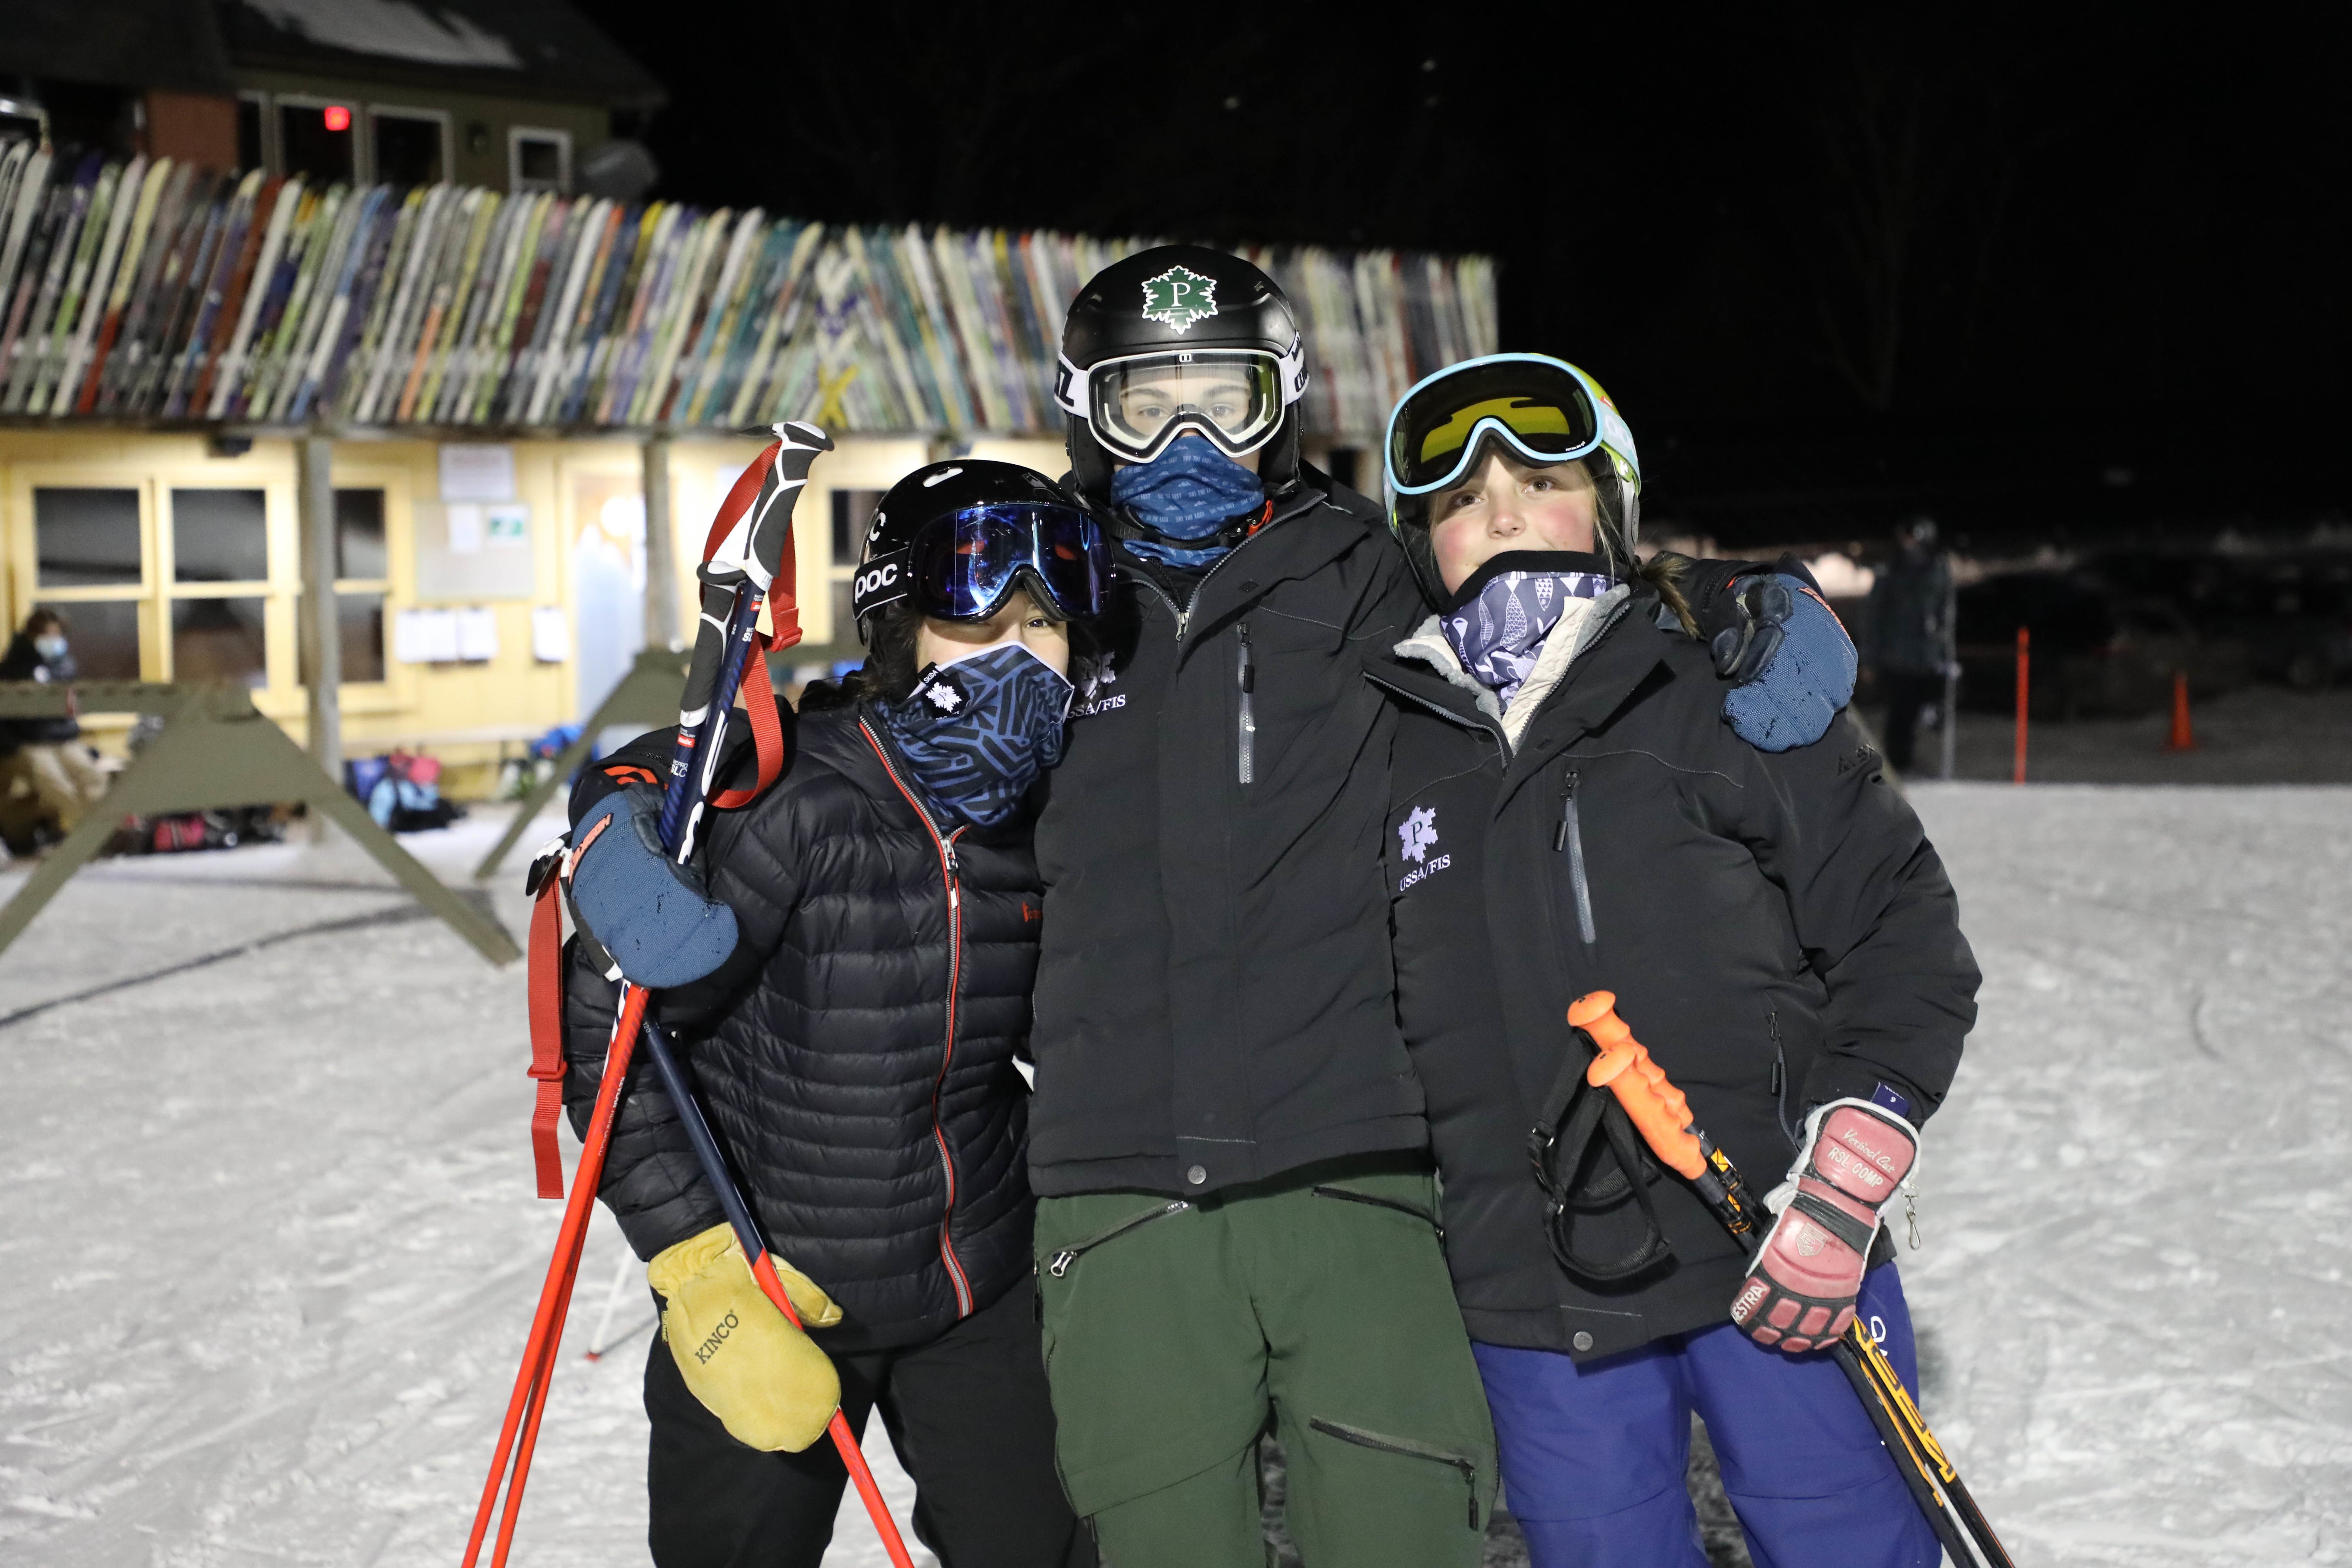 Proctor Academy Ski Area Boarding School Snow Sports Skiing